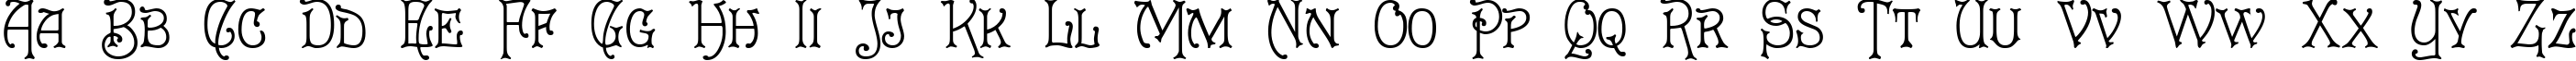 Пример написания английского алфавита шрифтом Le Grand